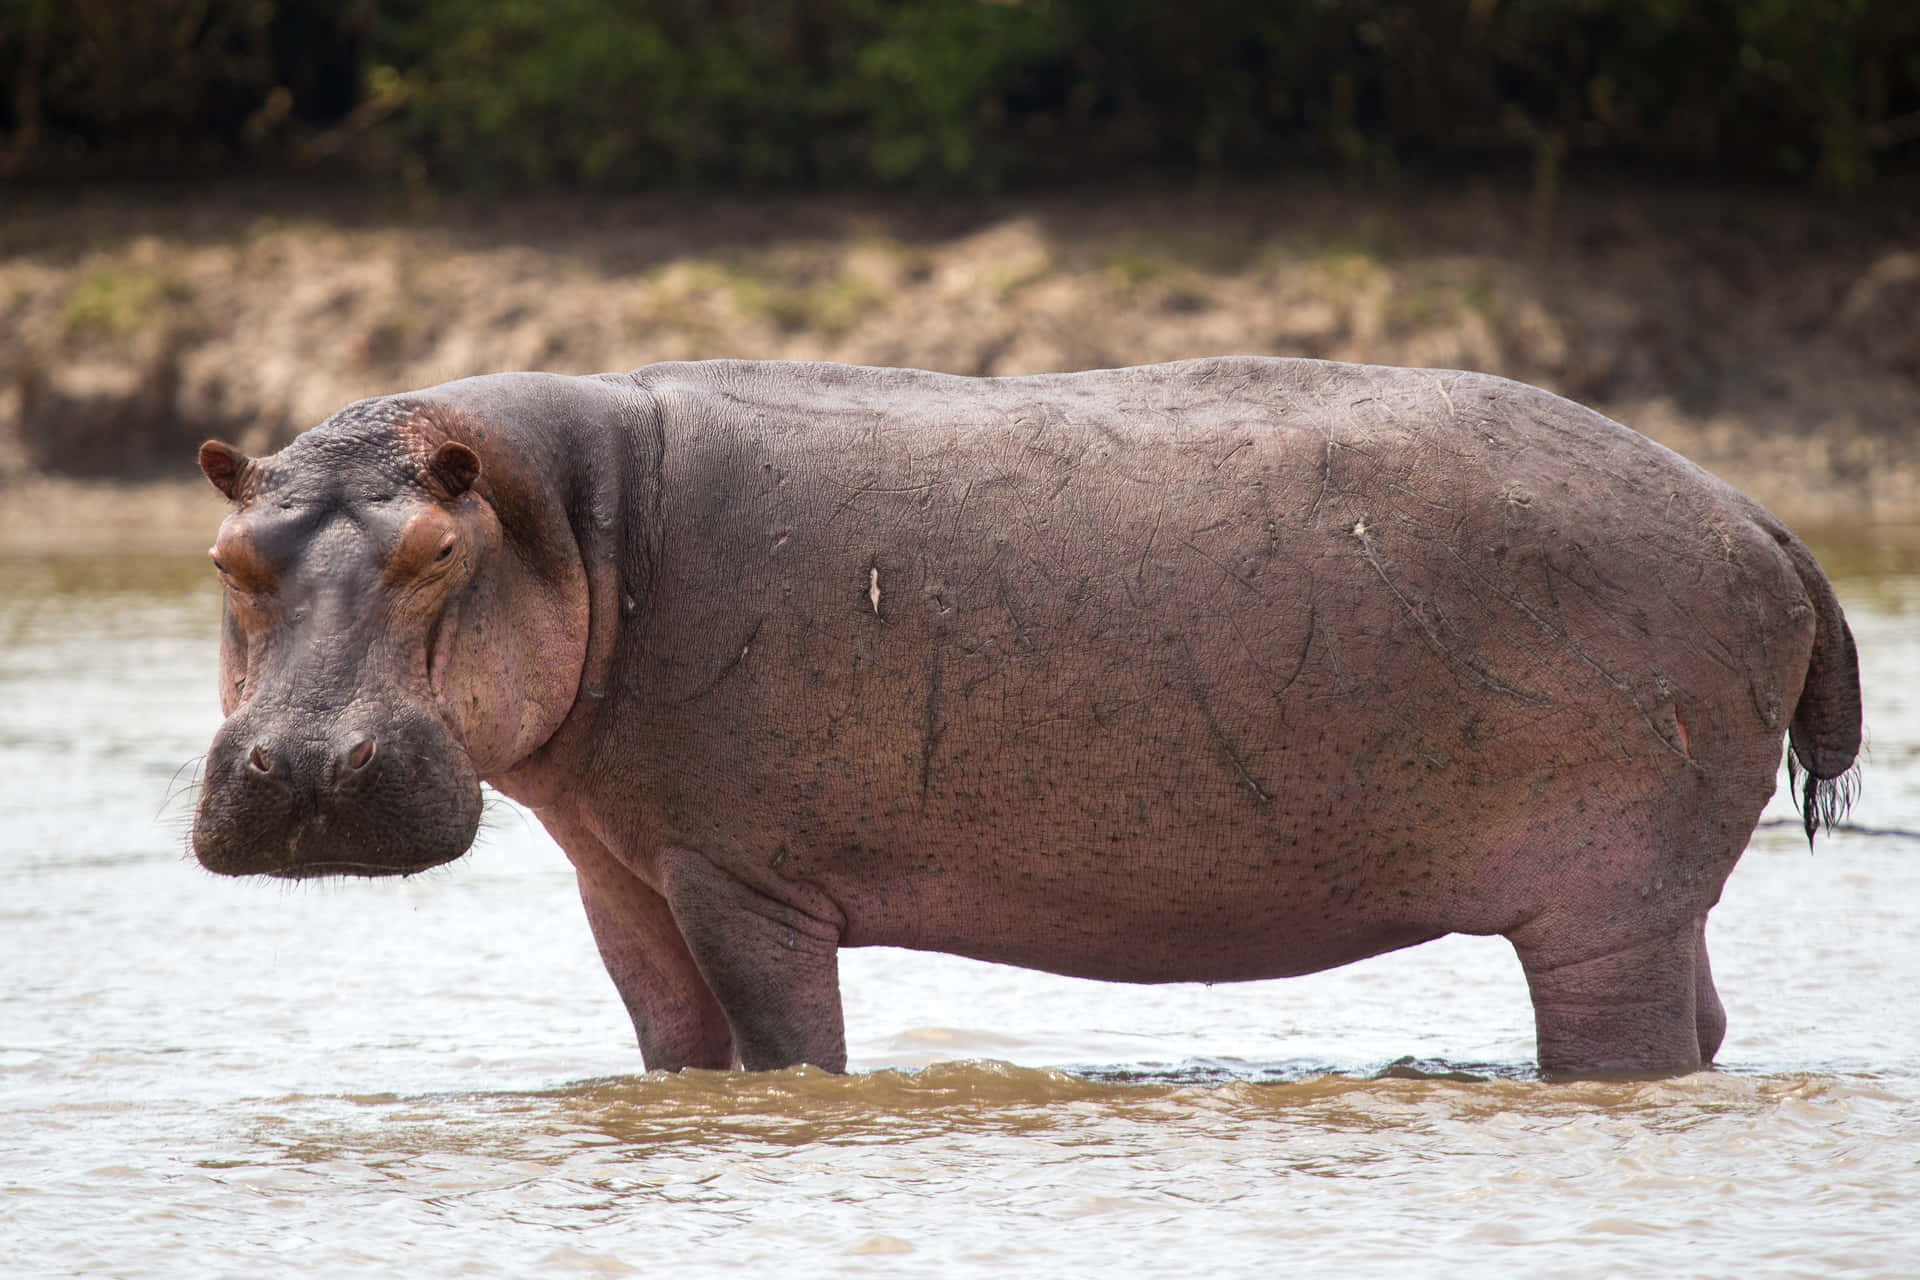 A Garden Variety Hippo Enjoying a Splash in the Water